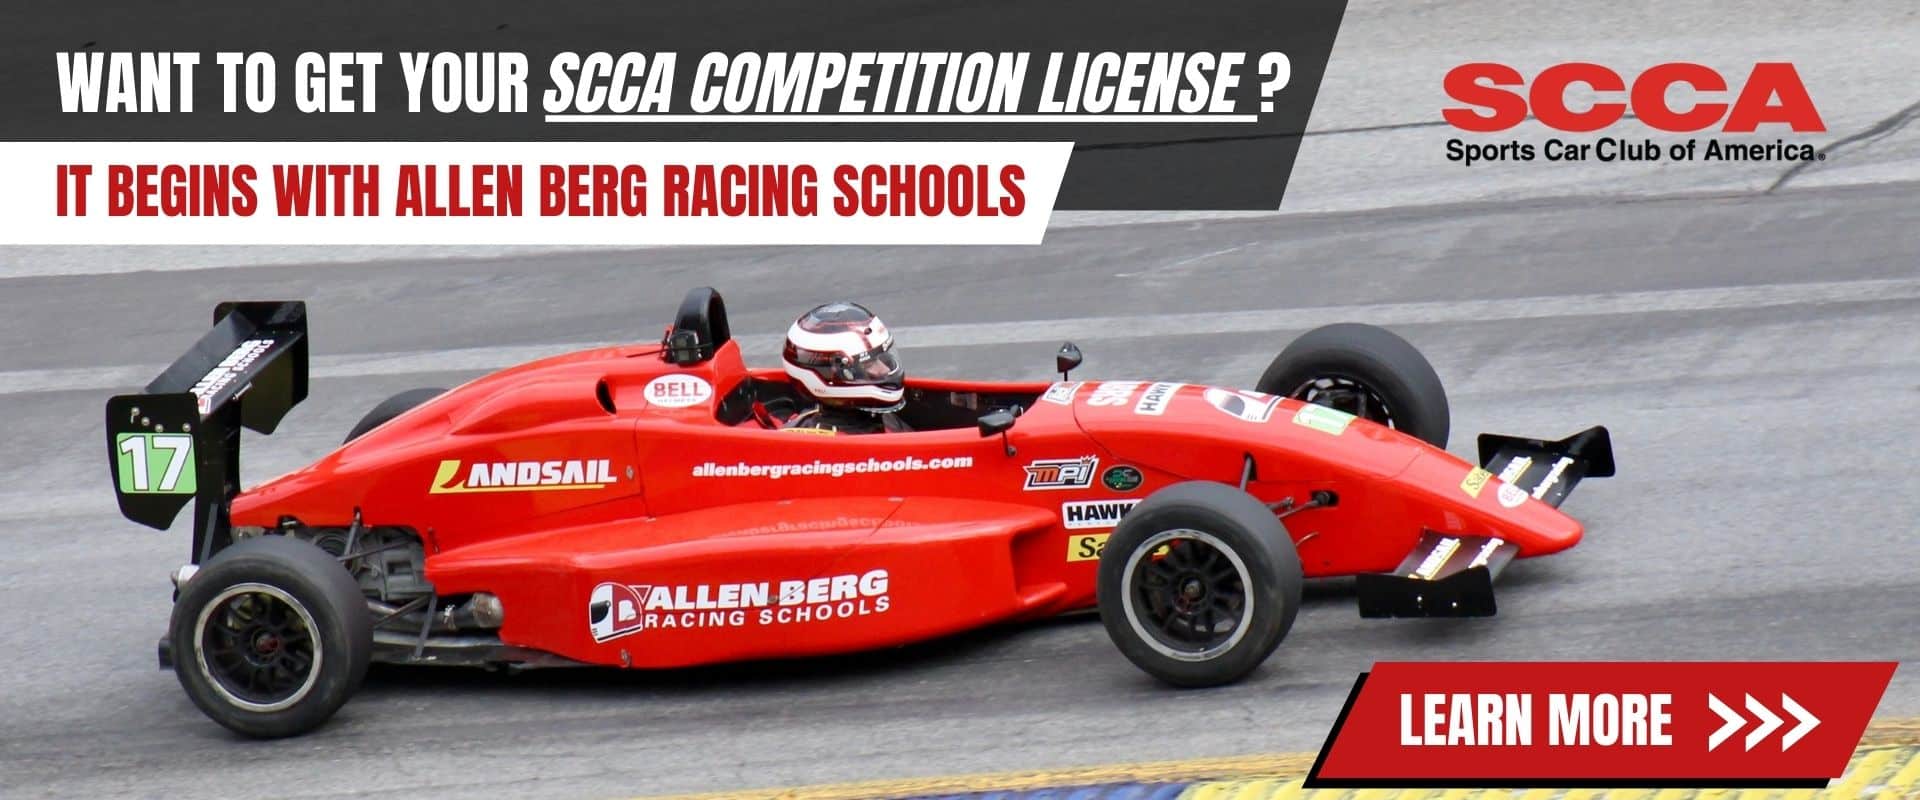 Scca competition license banner